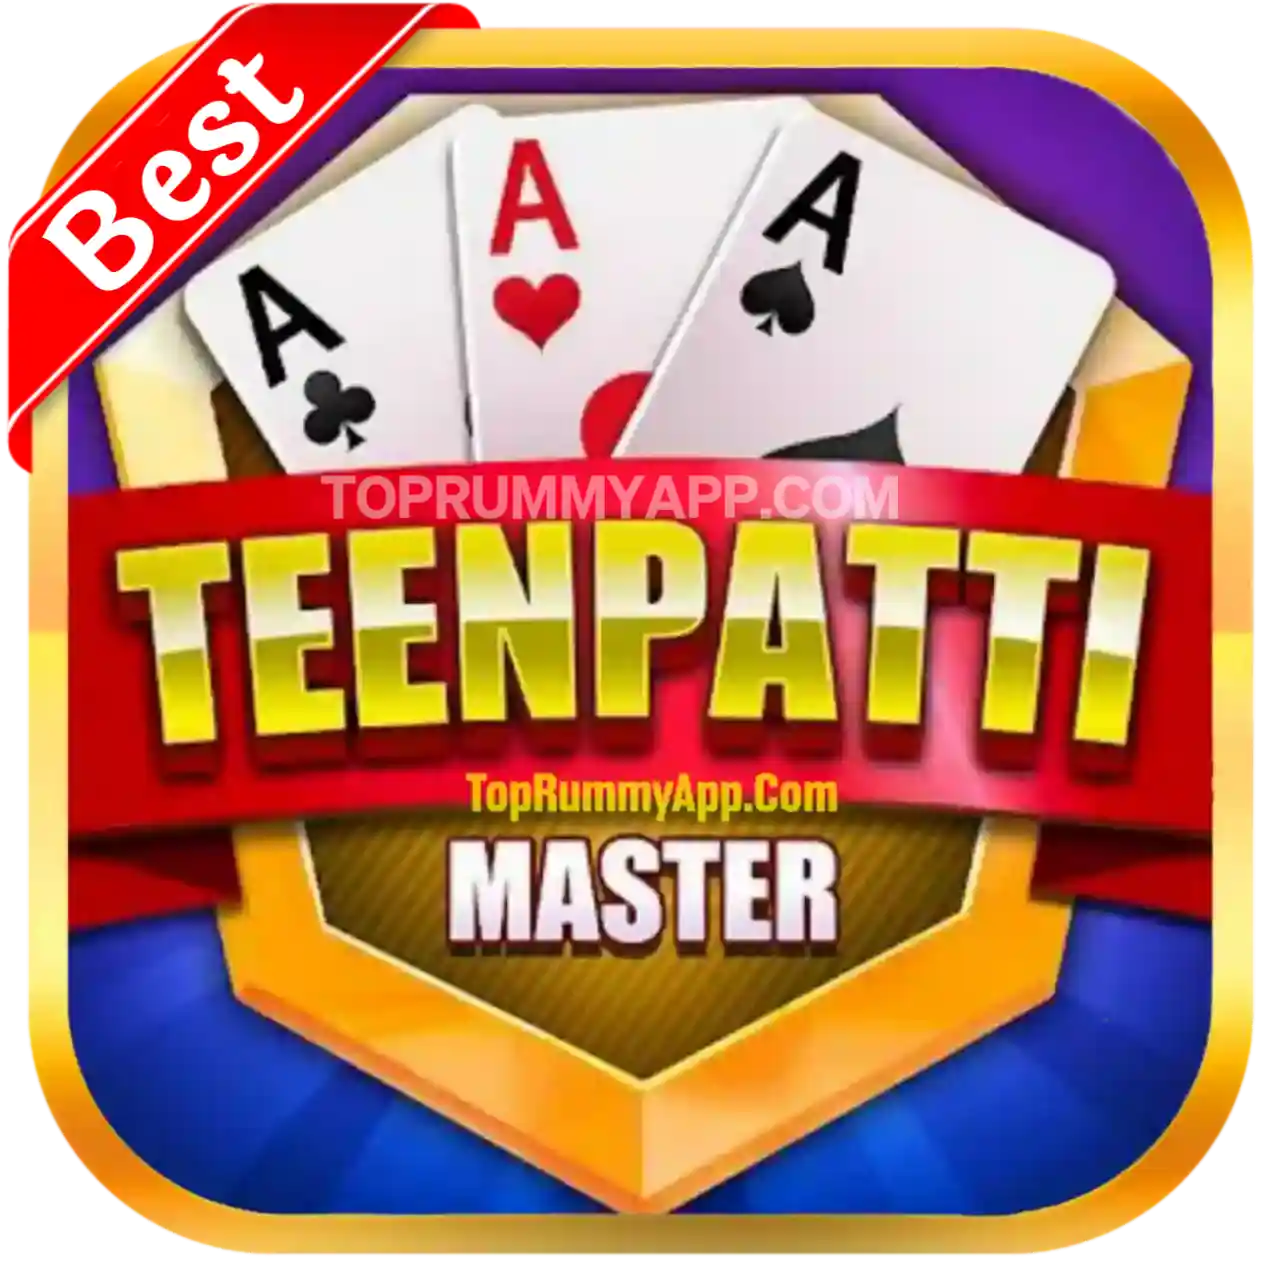 Teen Patti Master Apk Download - Teen Patti Yes Apk Download